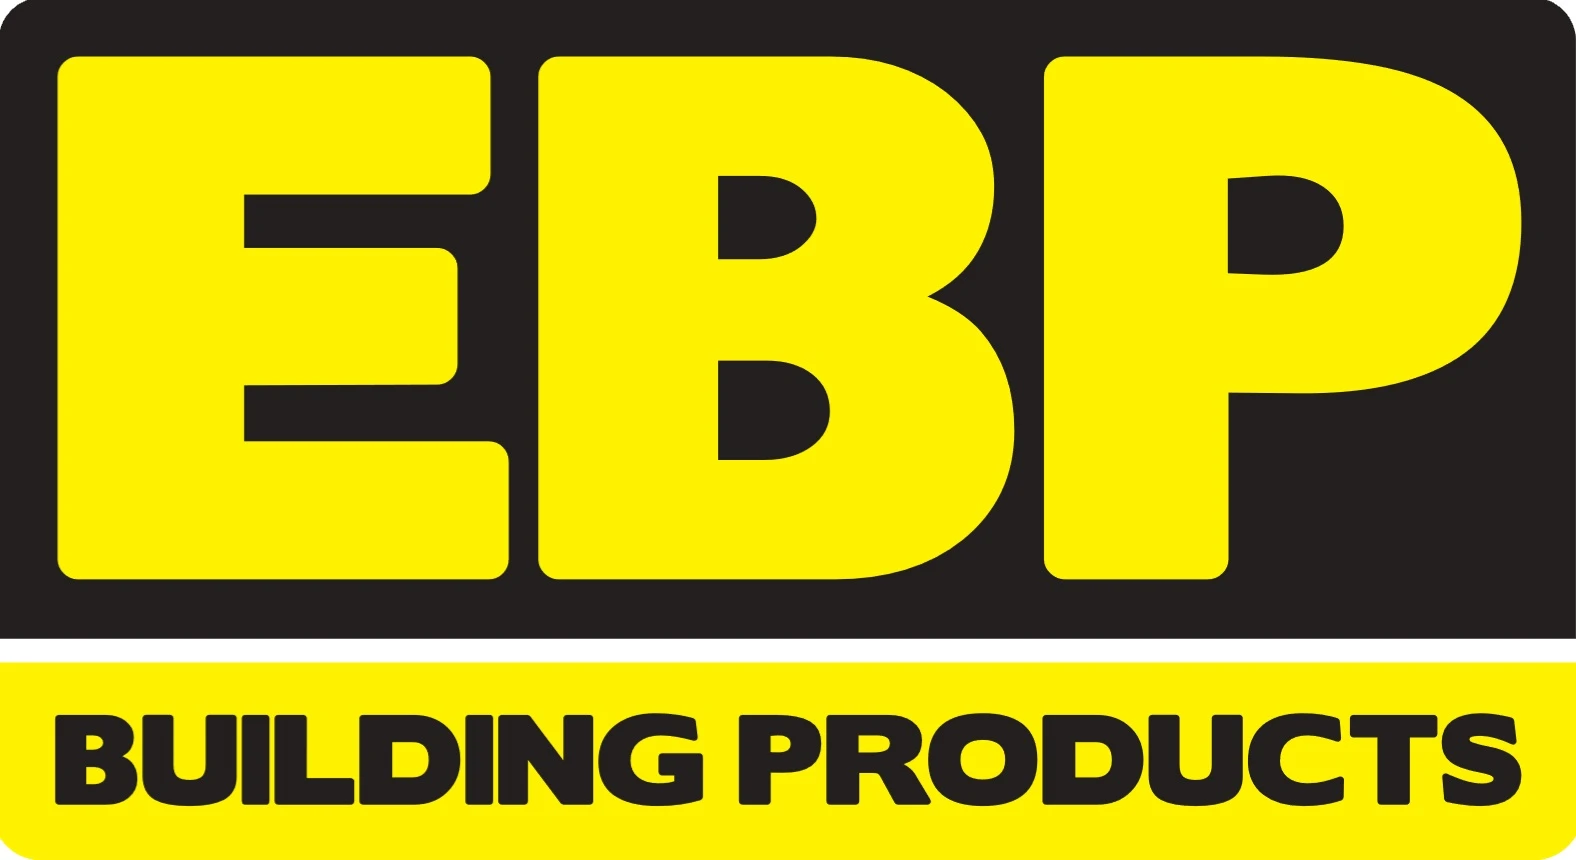 EBP Building Products Ltd Logo